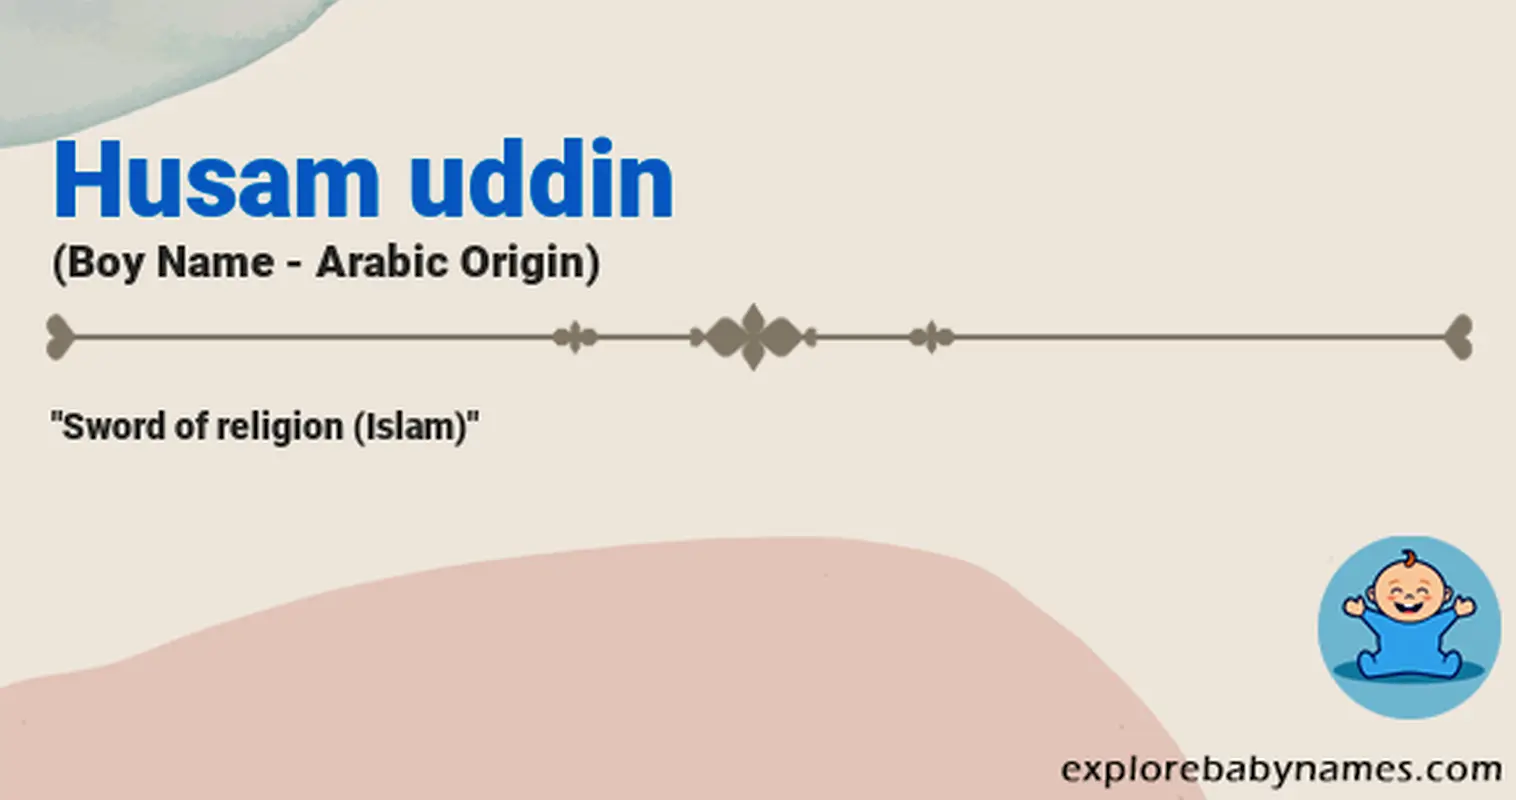 Meaning of Husam uddin